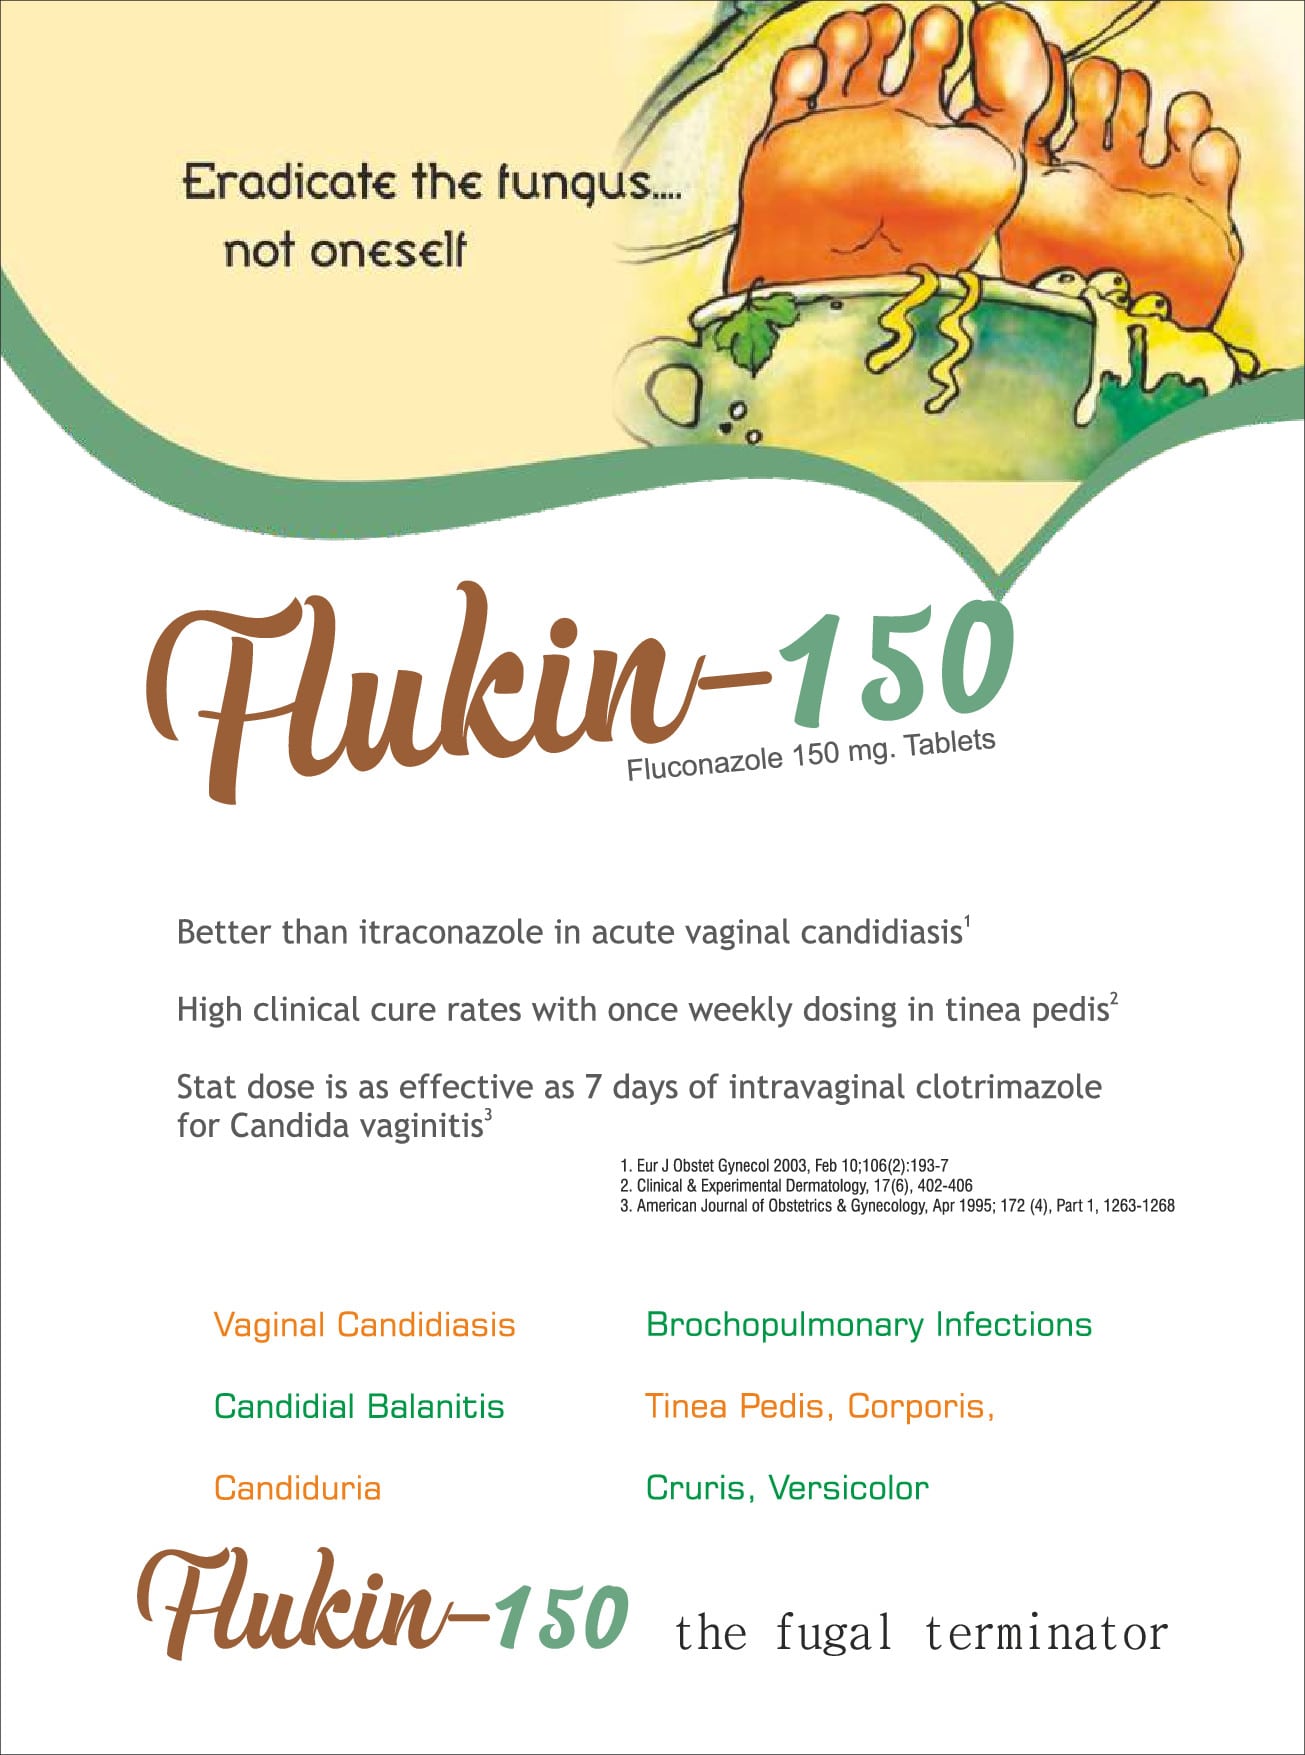 Flukin-150